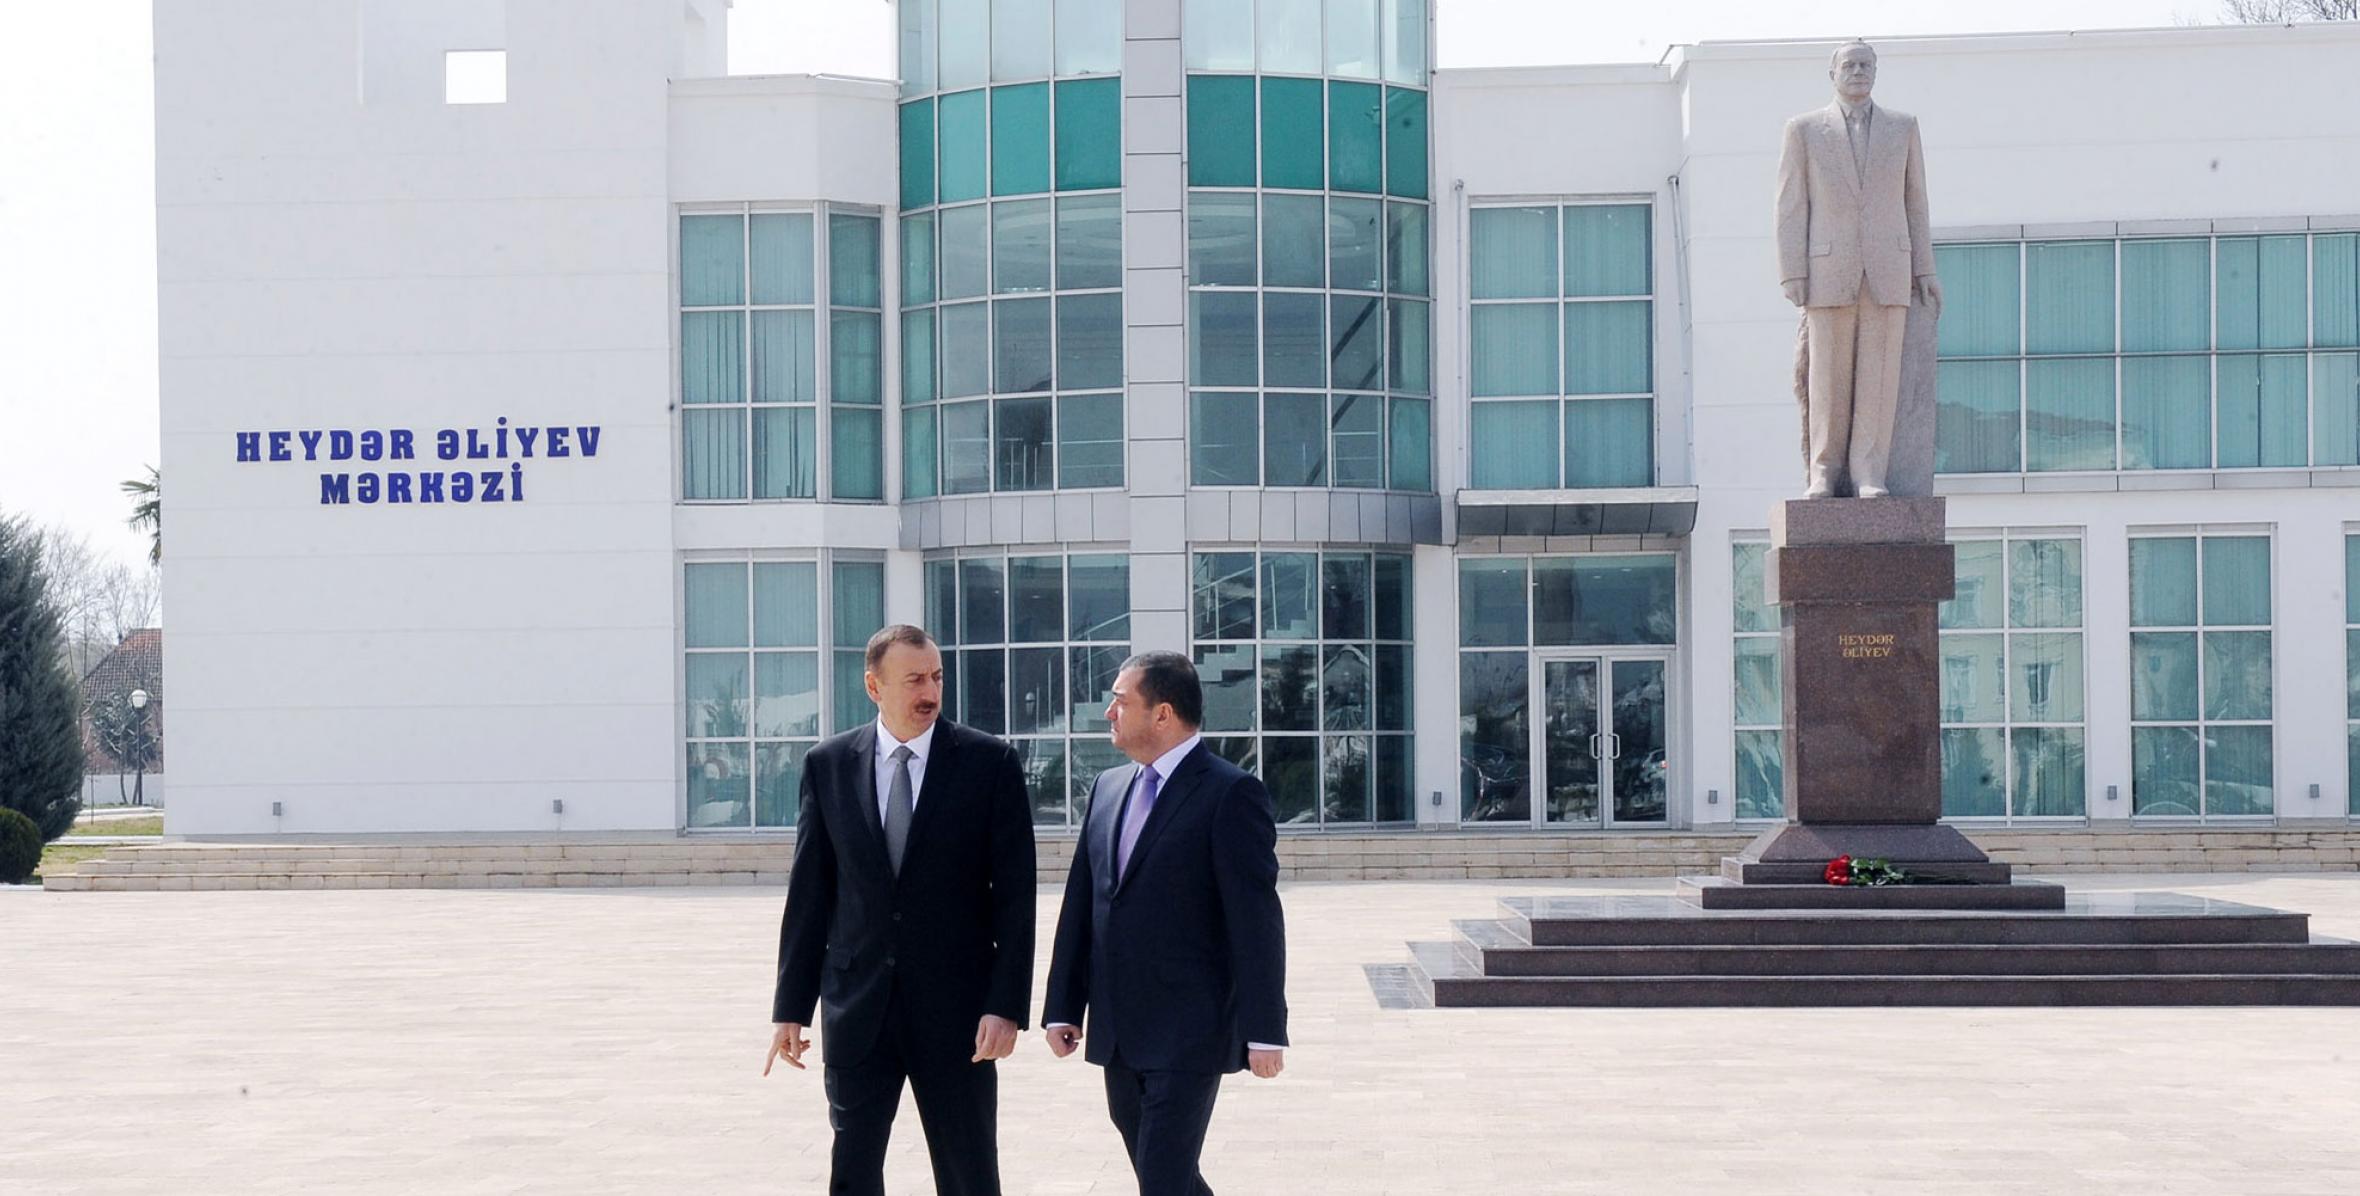 Ilham Aliyev visited the statue of nationwide leader Heydar Aliyev in Masalli